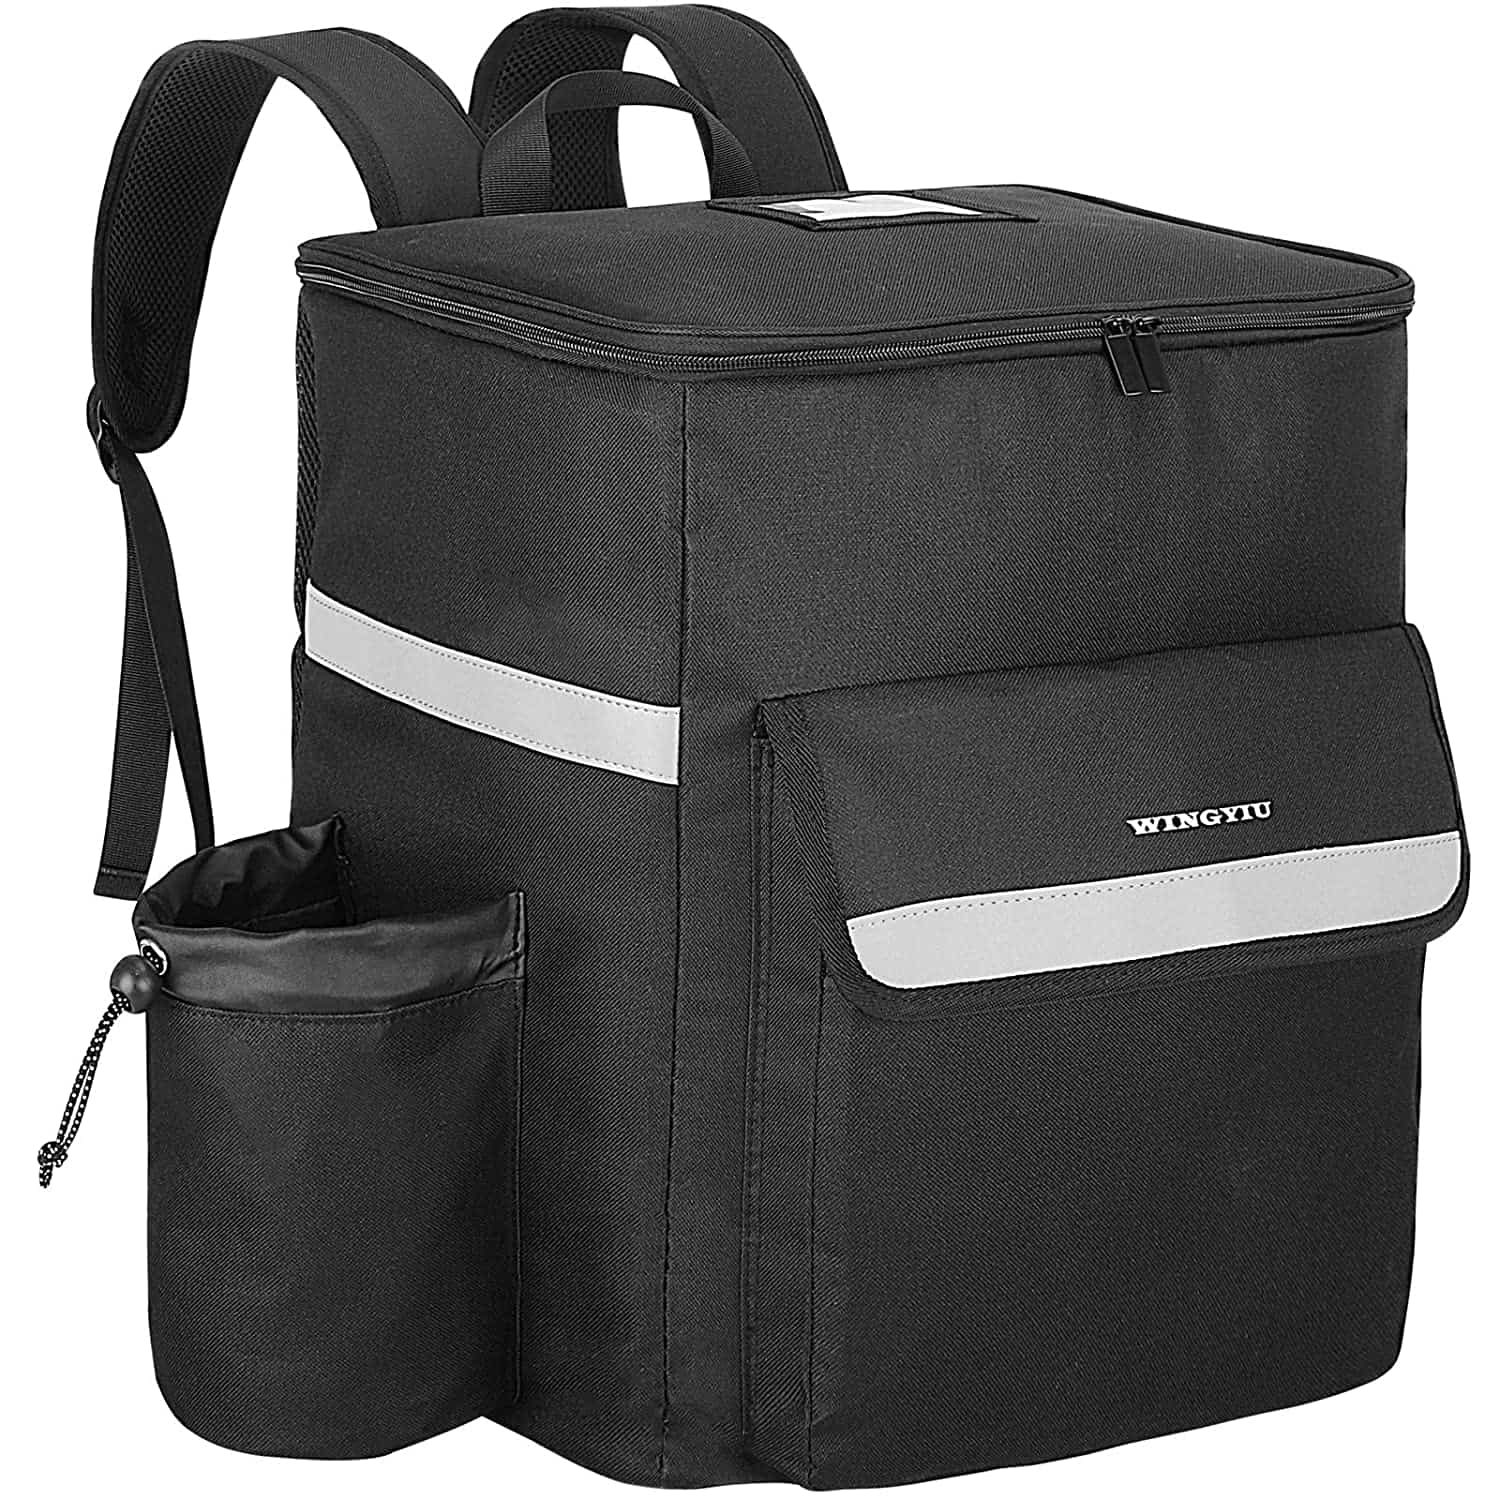 thermal food delivery backpack doordash bag